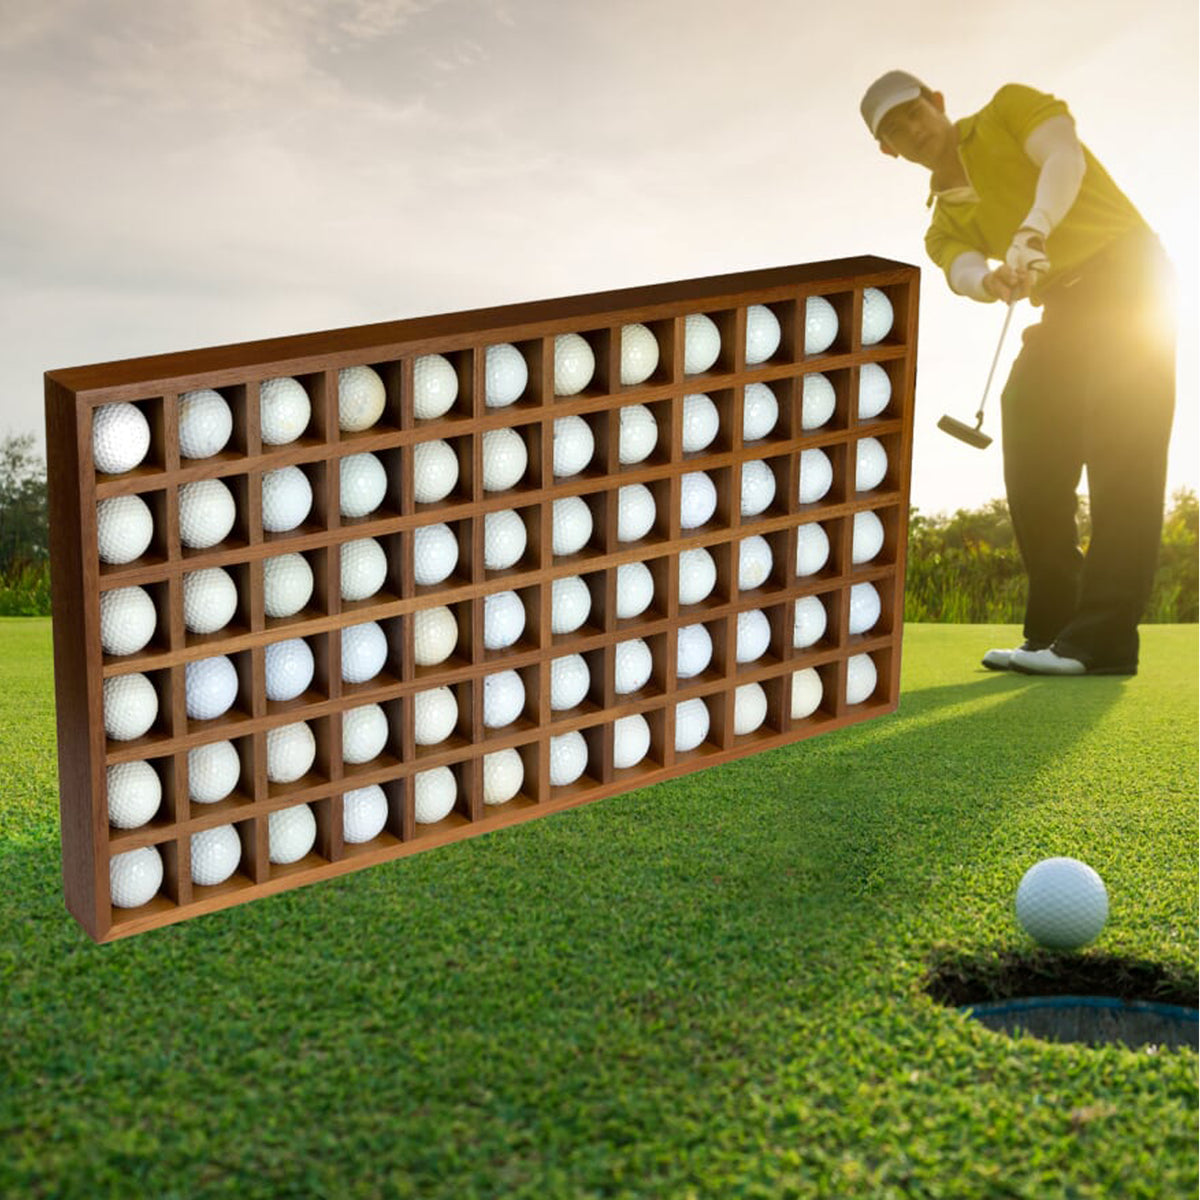 72 Golf Ball Holder/Display - 60457